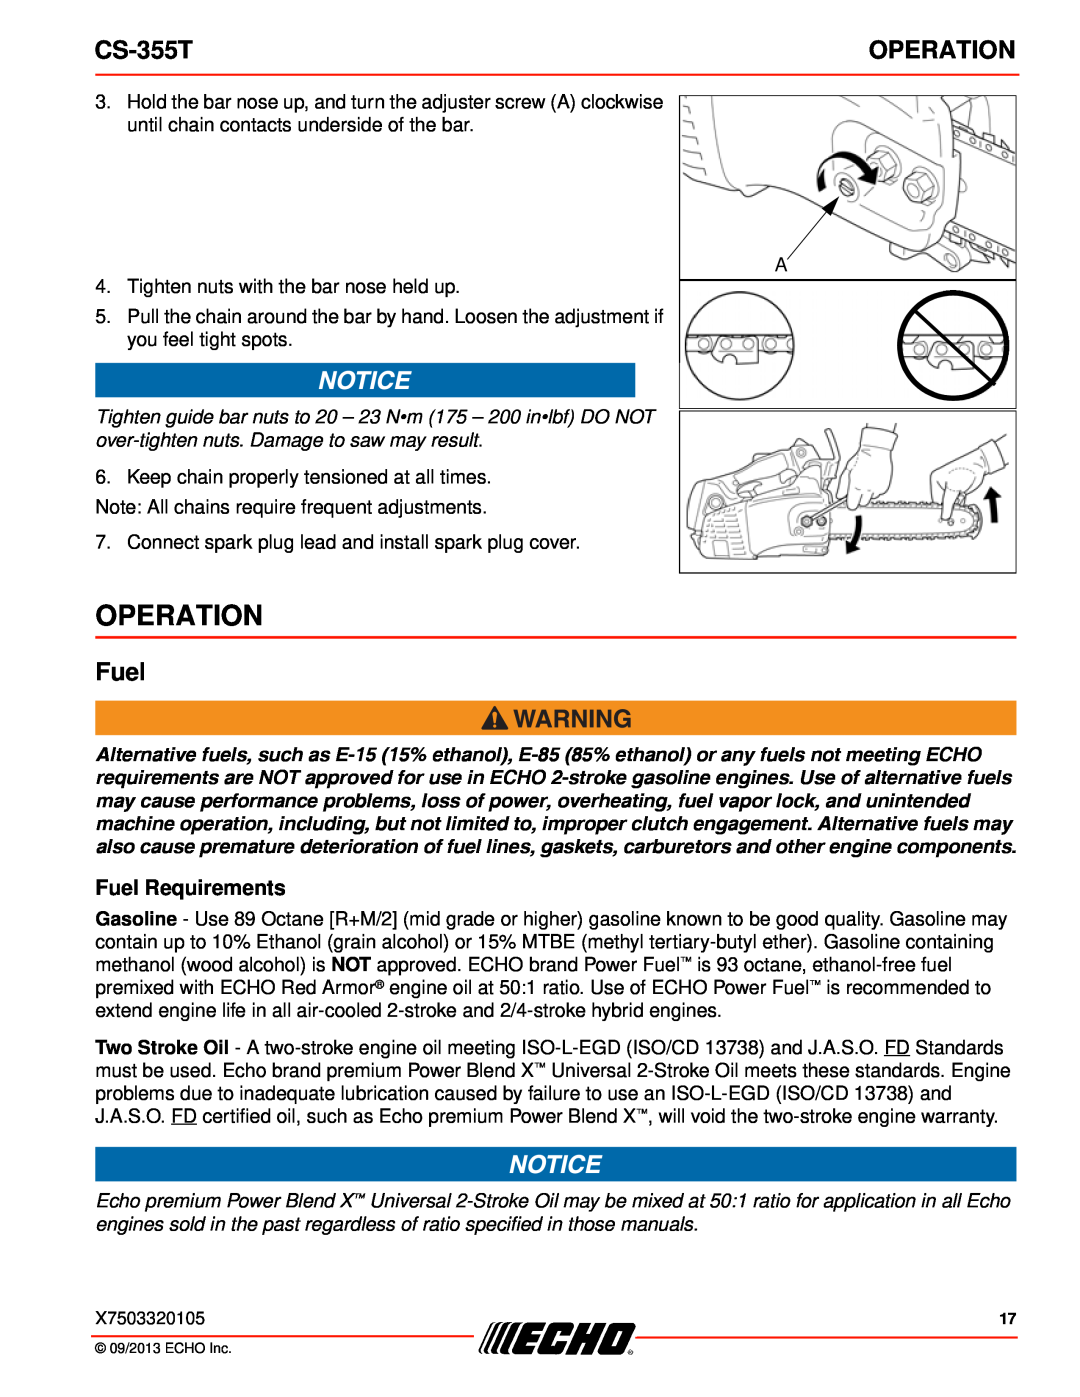 Echo CS-355T instruction manual Operation, Fuel Requirements 